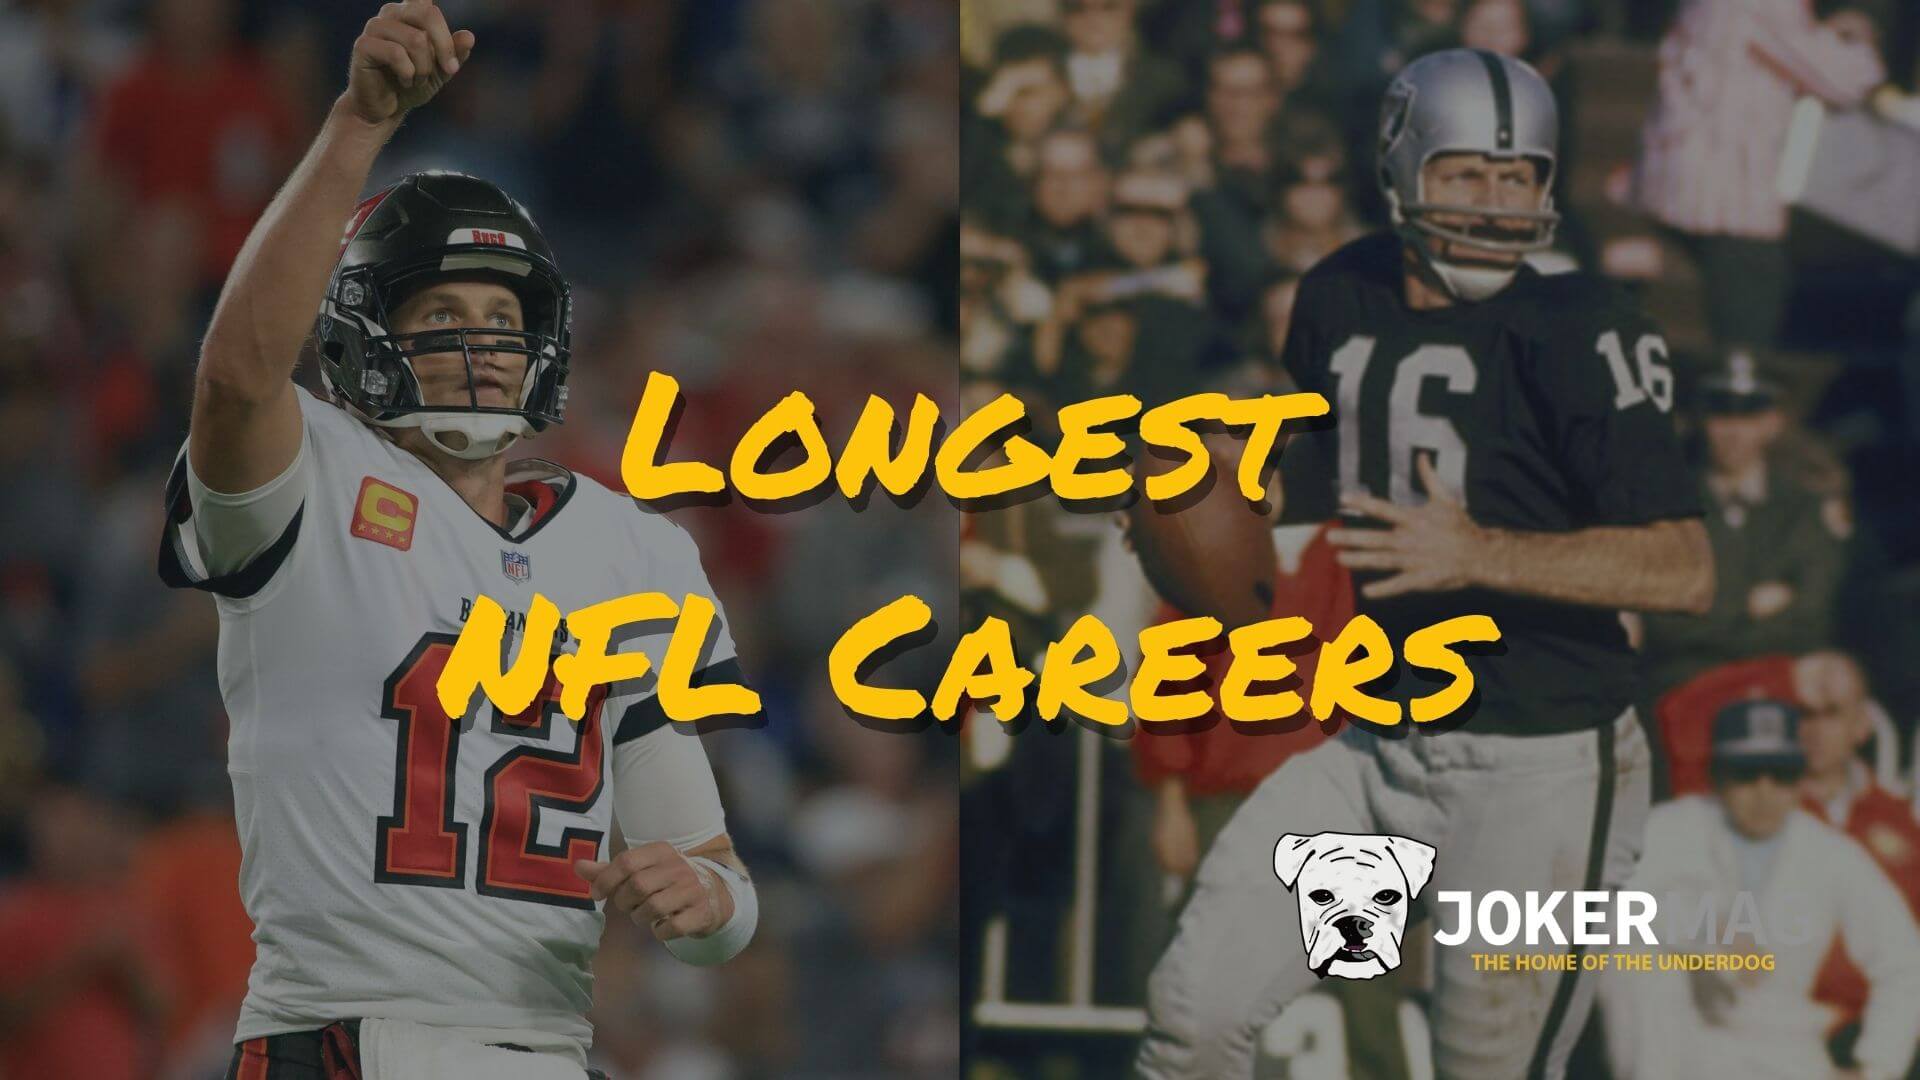 Tom Brady, George Blanda and the longest NFL careers ever